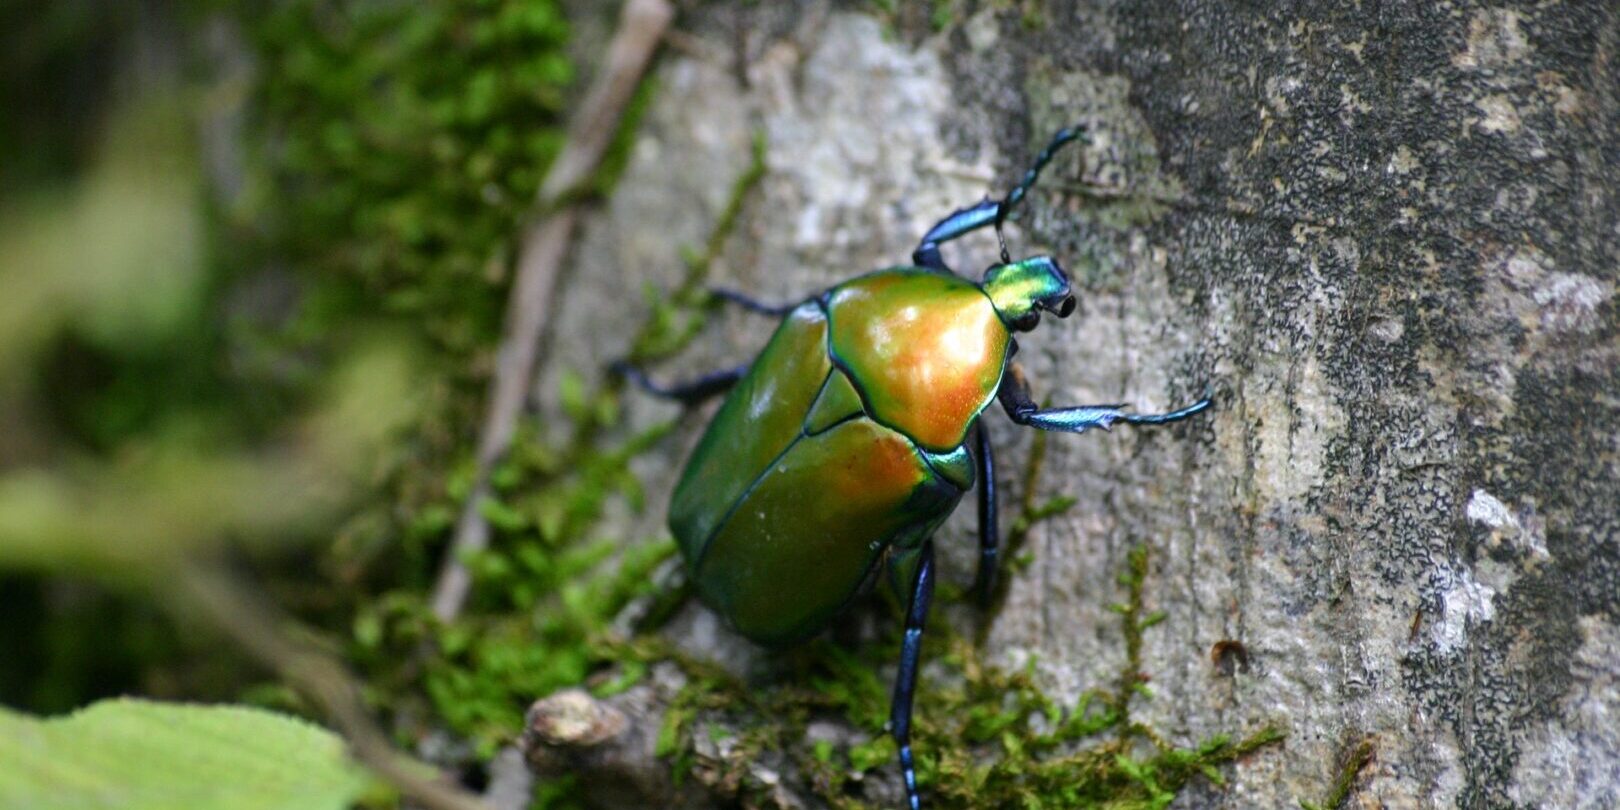 green-june-beetle-on-tree-bark-with-green-mosh-in-closeup-794464